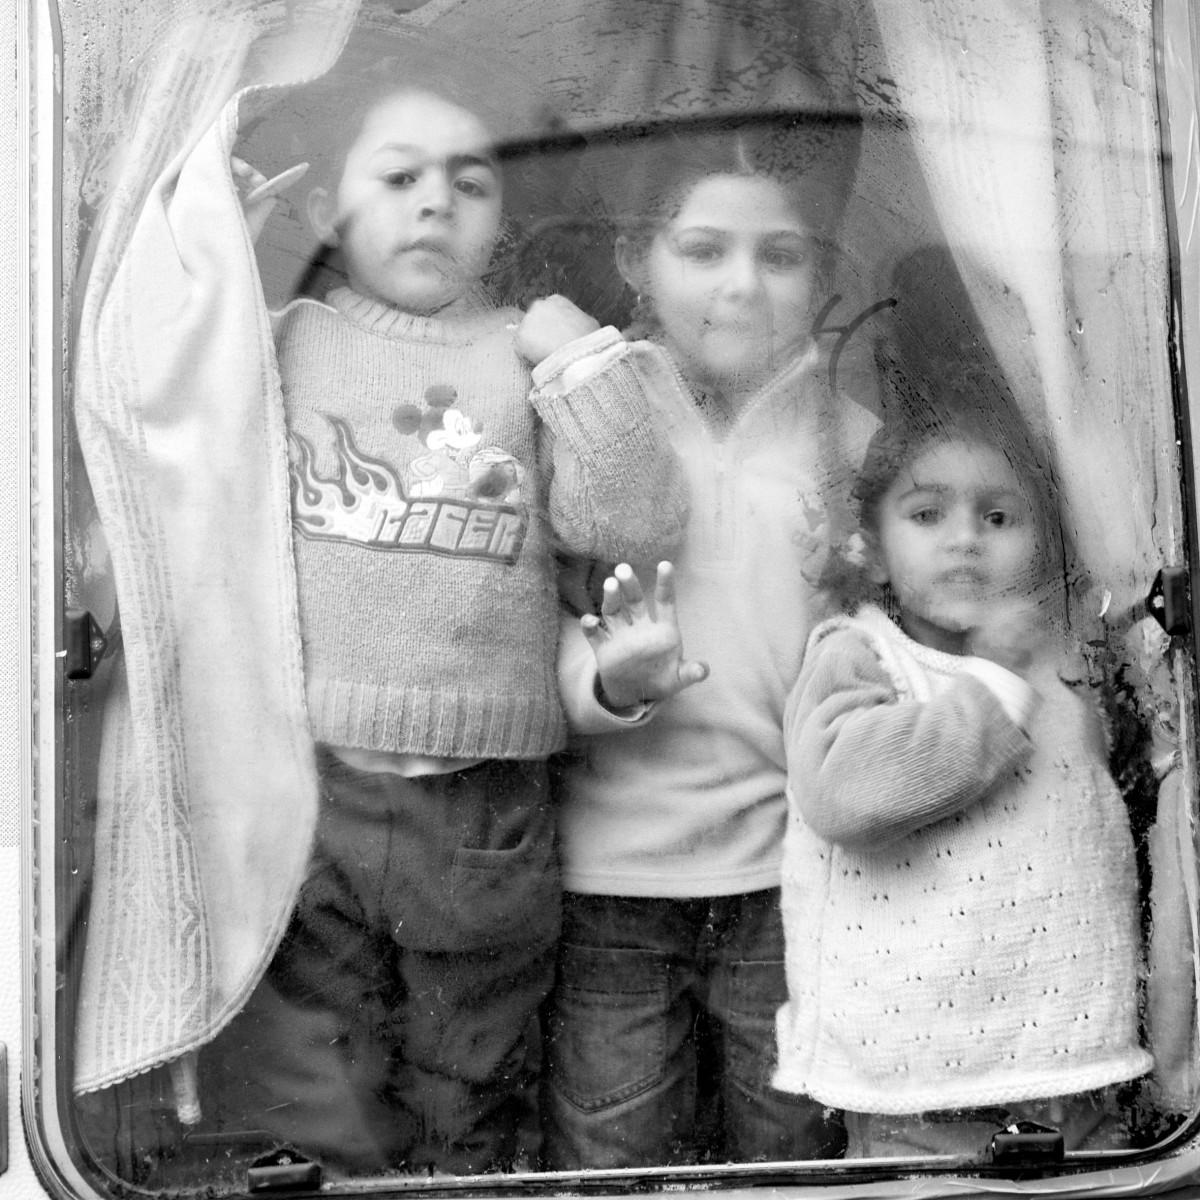 Gypsy children, Montreuil, France 2008. RAED BAWAYAH